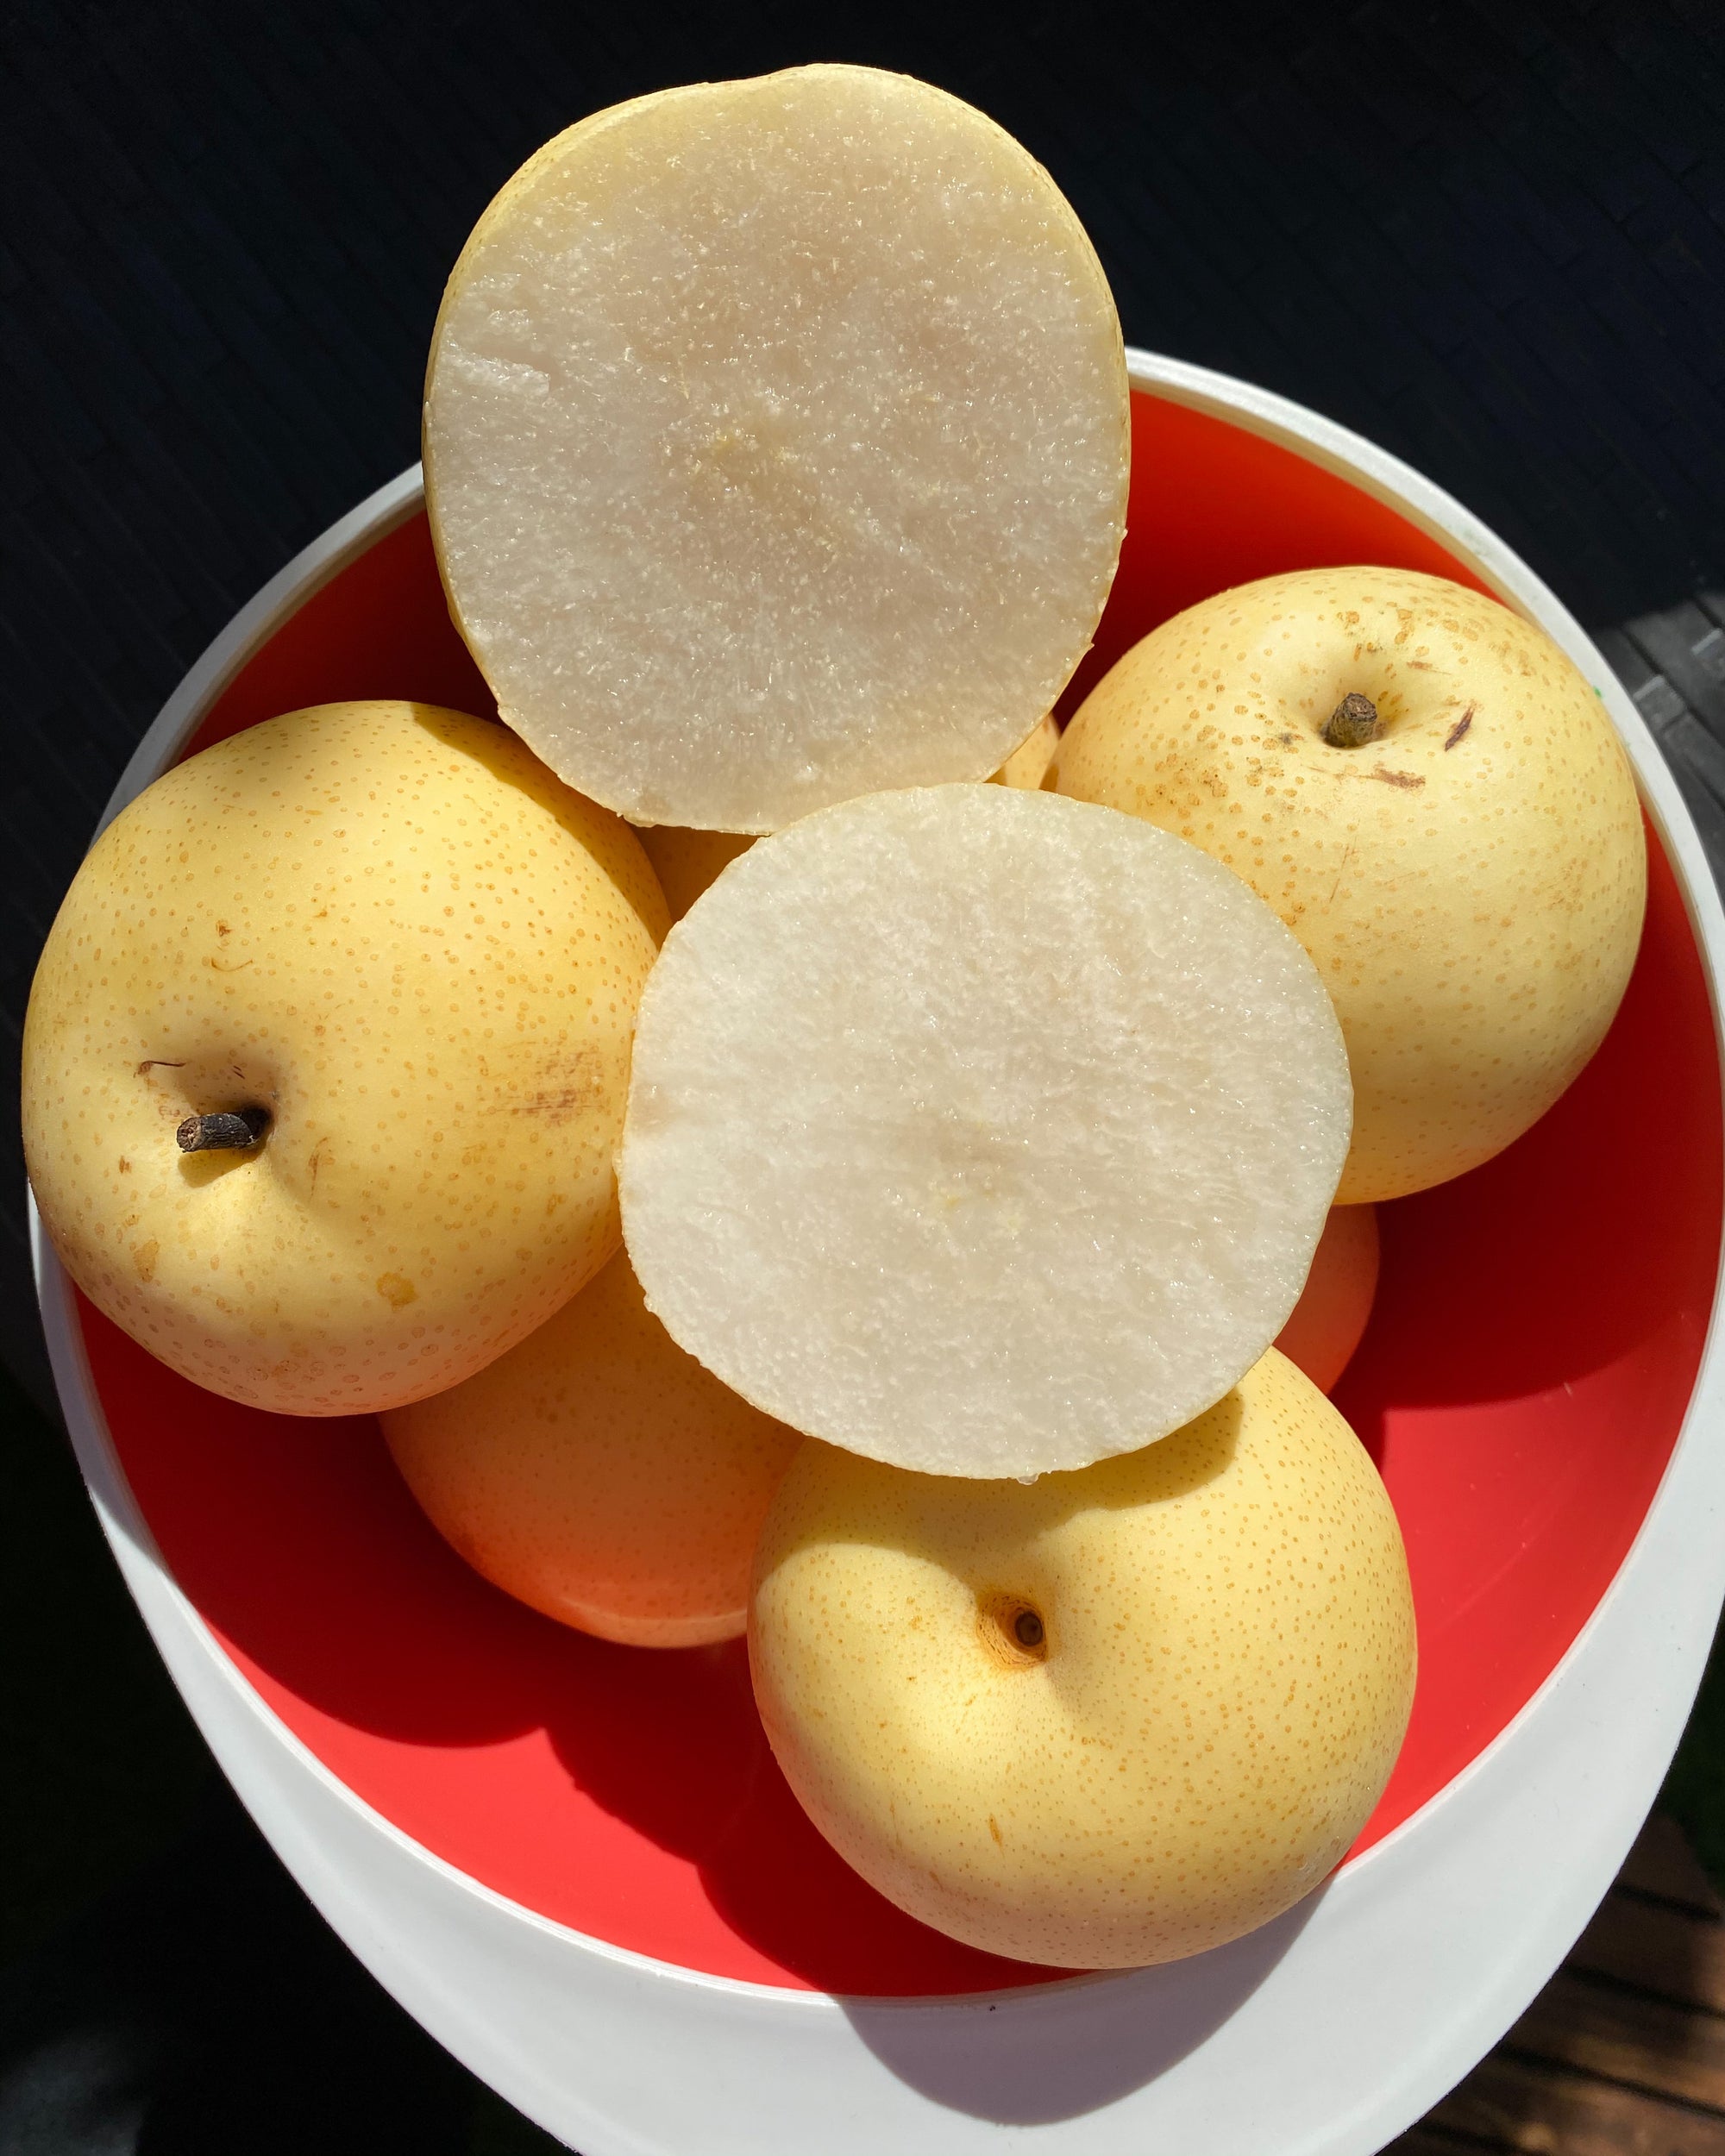 Korean Pears Buy 5 + 1 FREE